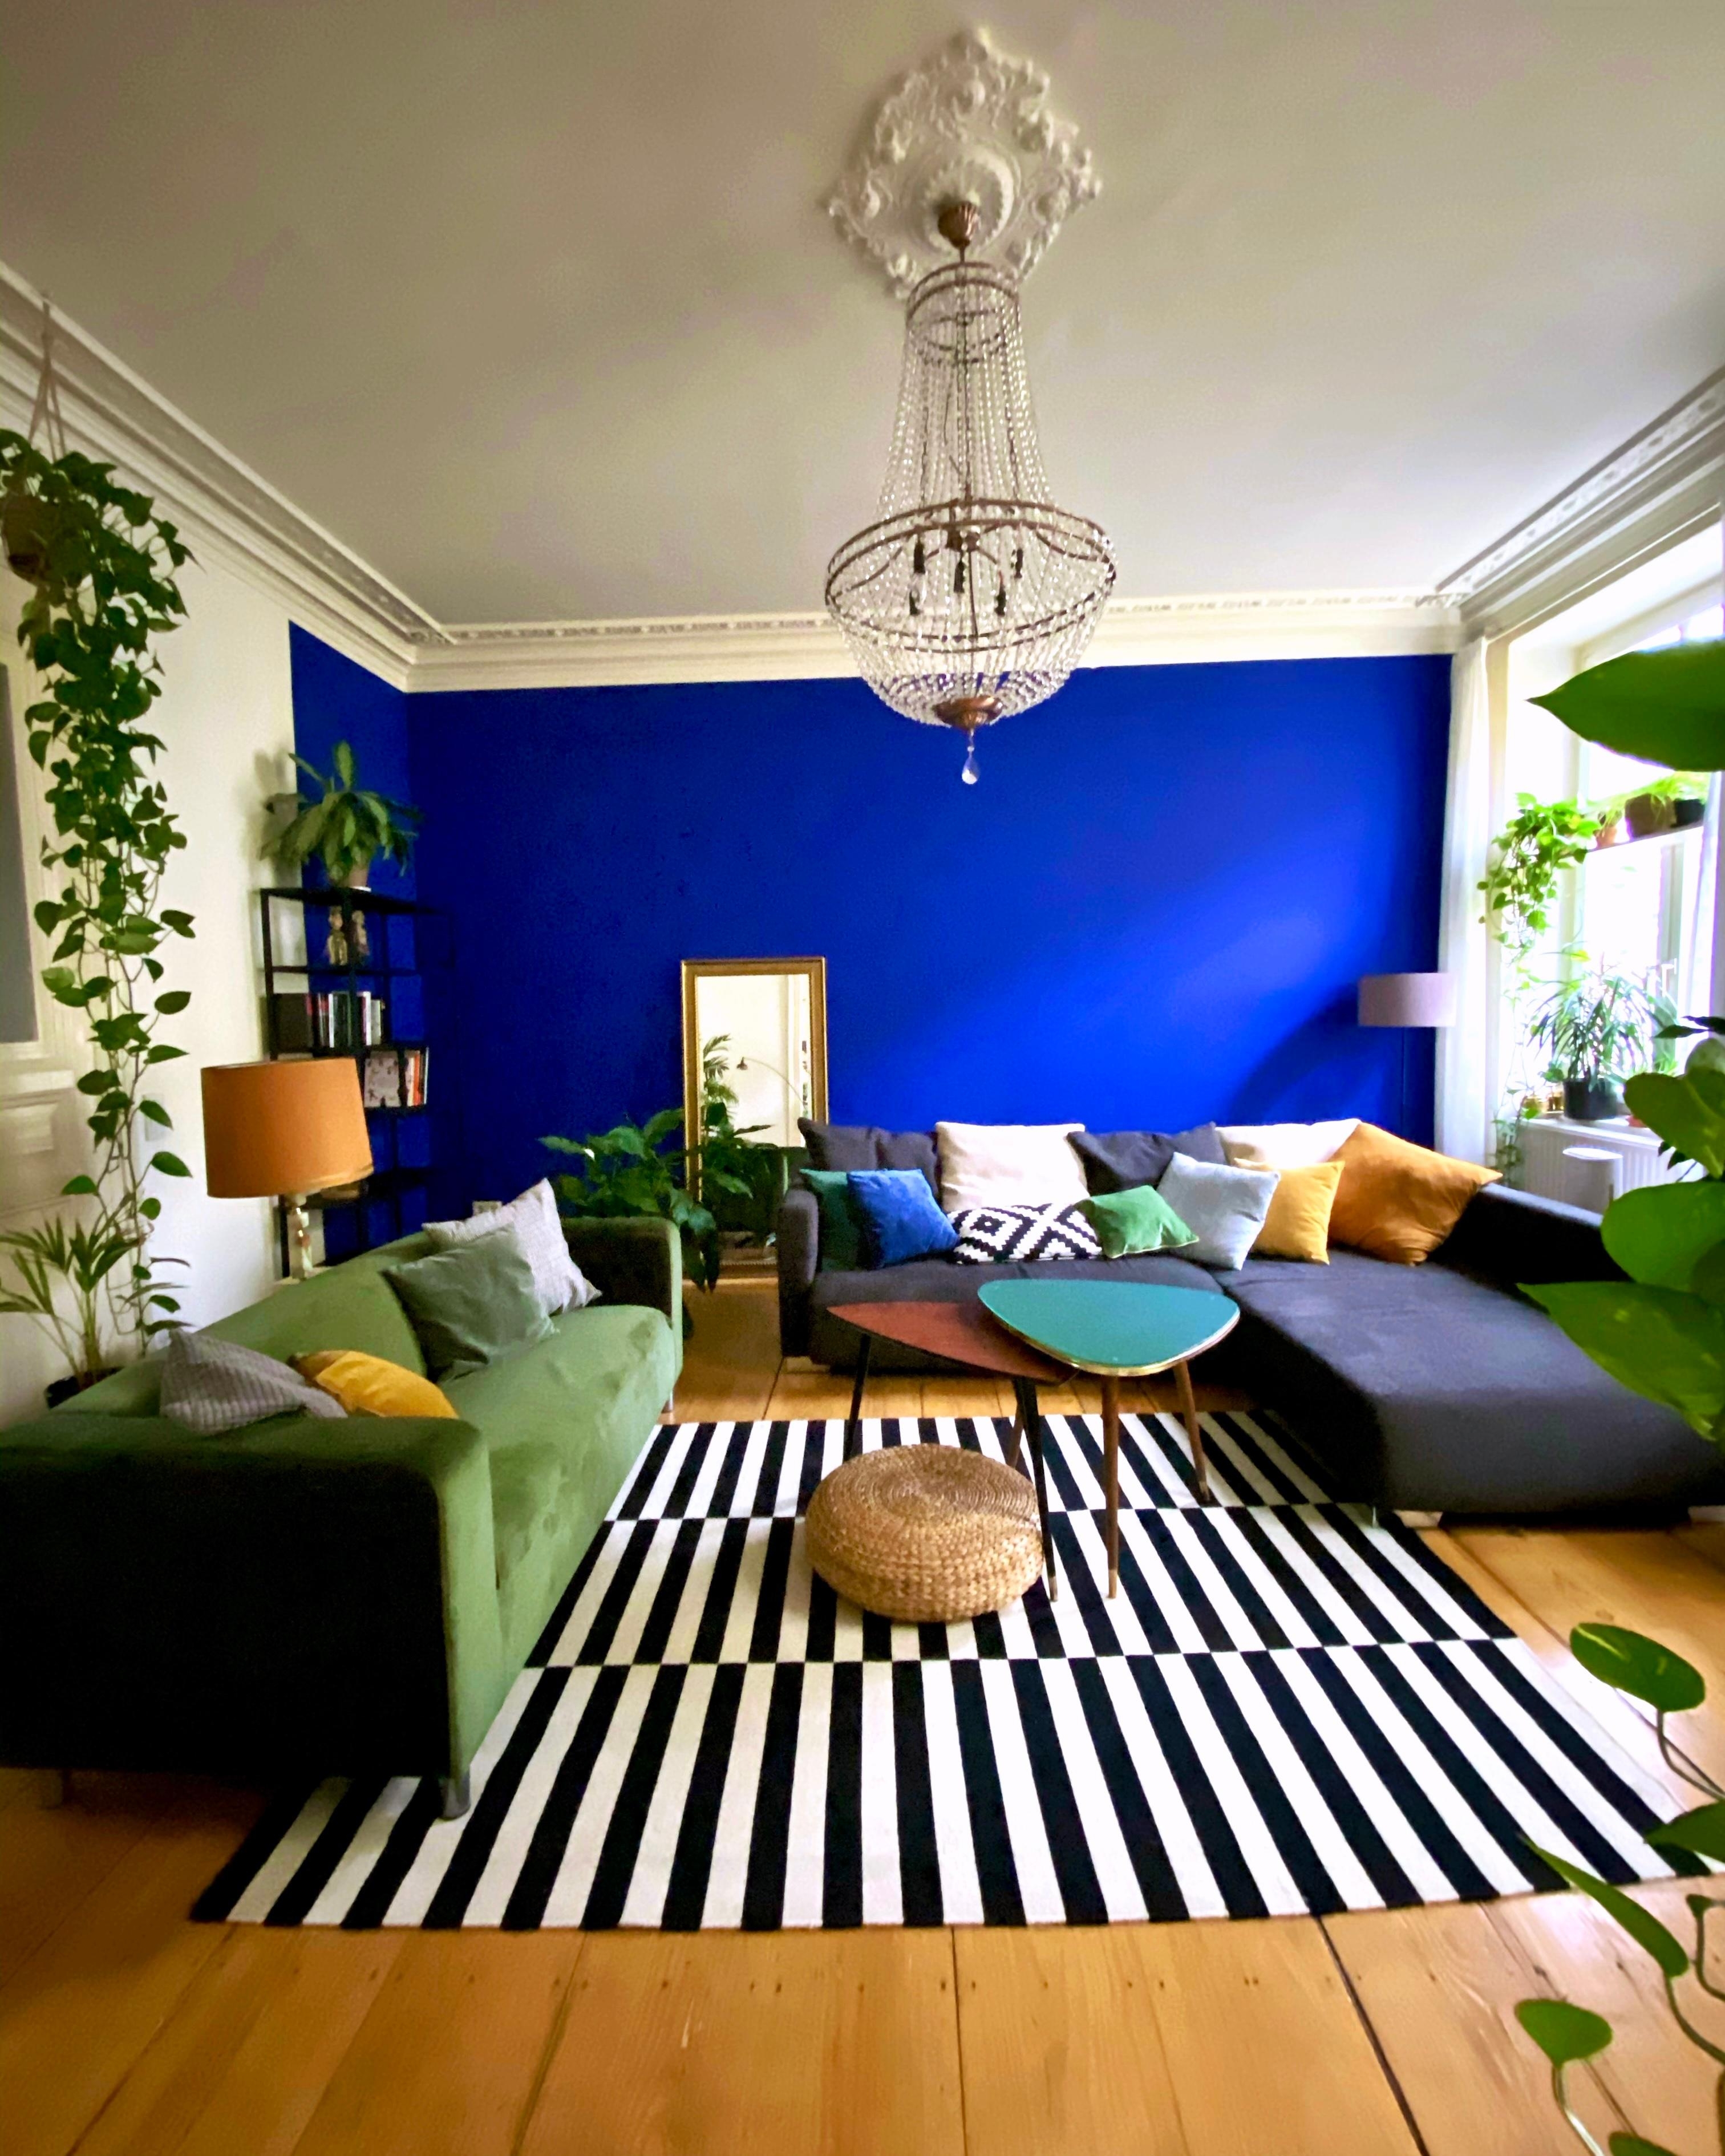 #wohnzimmer #livingroom #blau #azurblau #blauewand #altbau # urbanjungle #plants